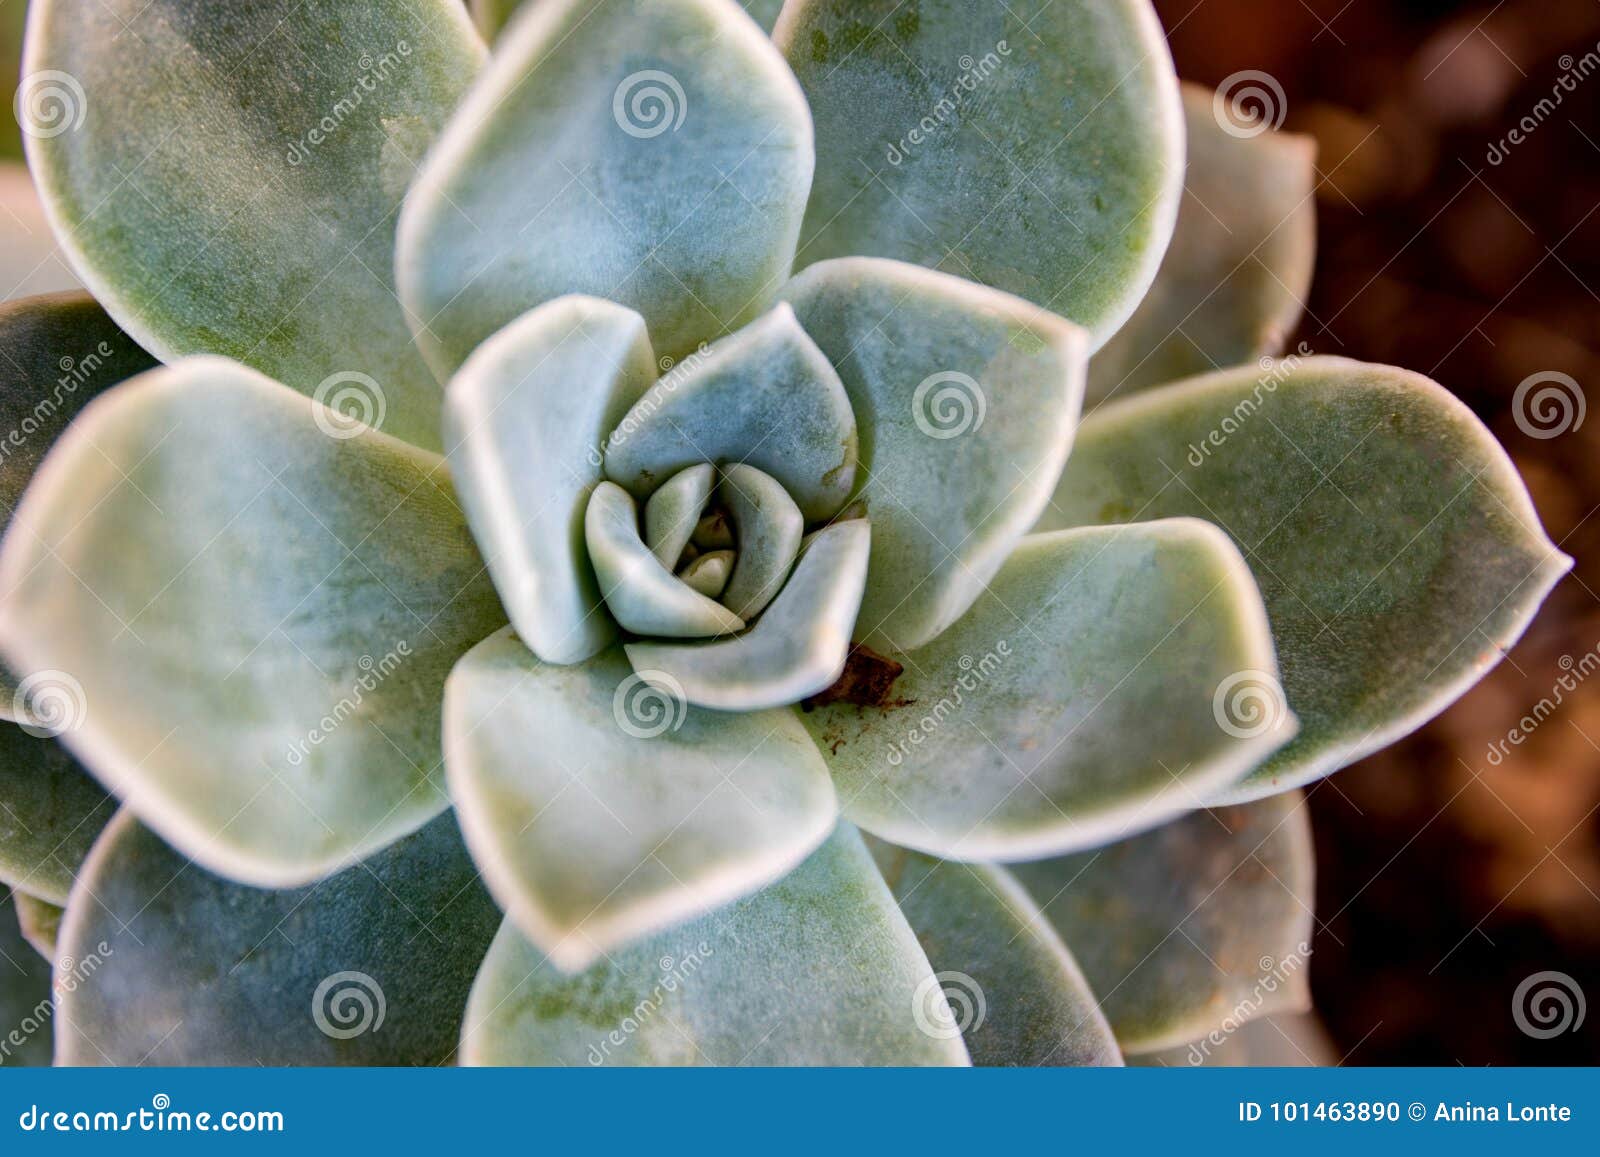 Desert Rose Rosette Succulent Stock Photo - Image of succulent ...